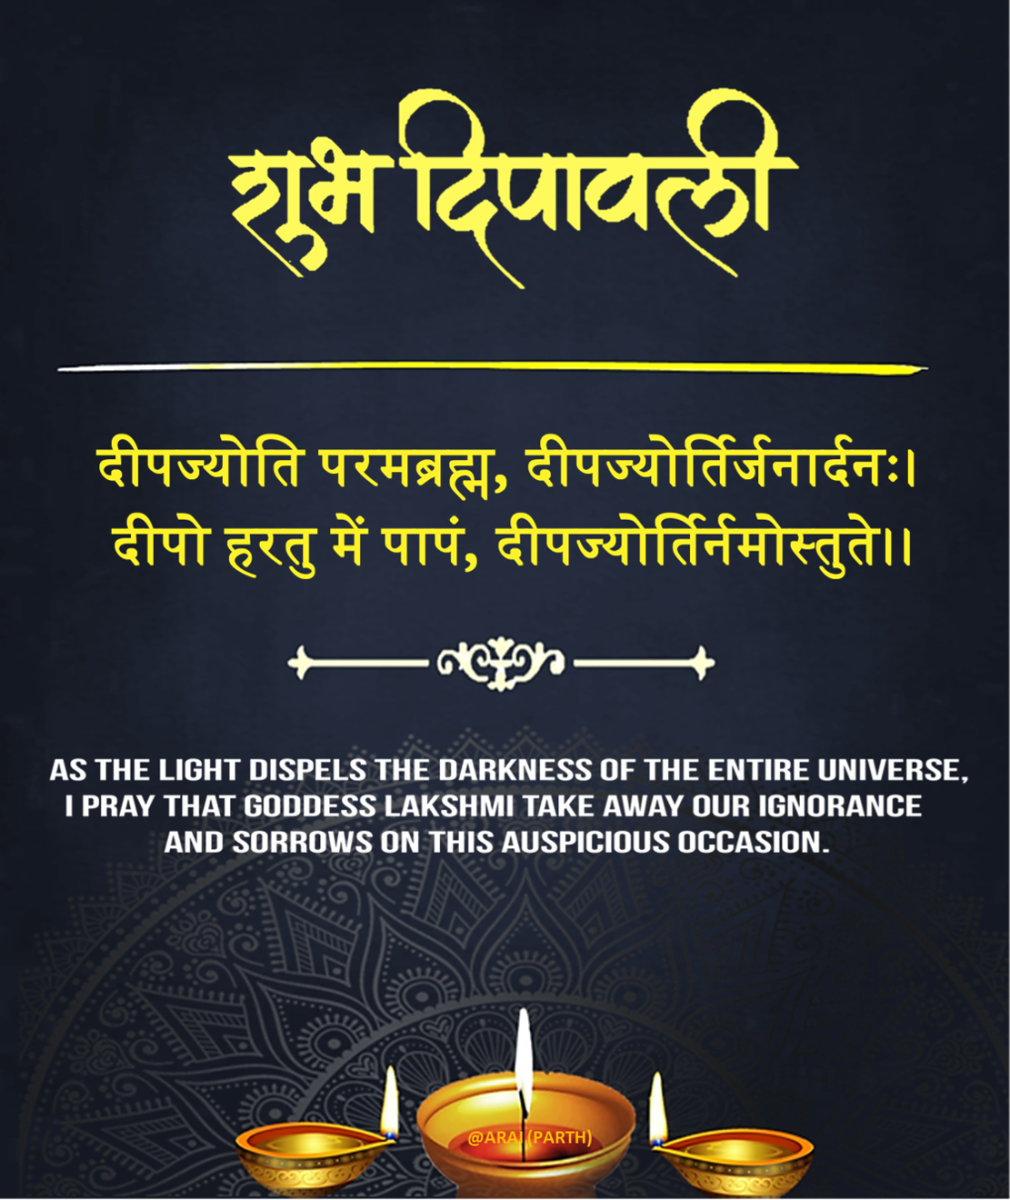 Diwali Wishes in Hindi and Sanskrit Language